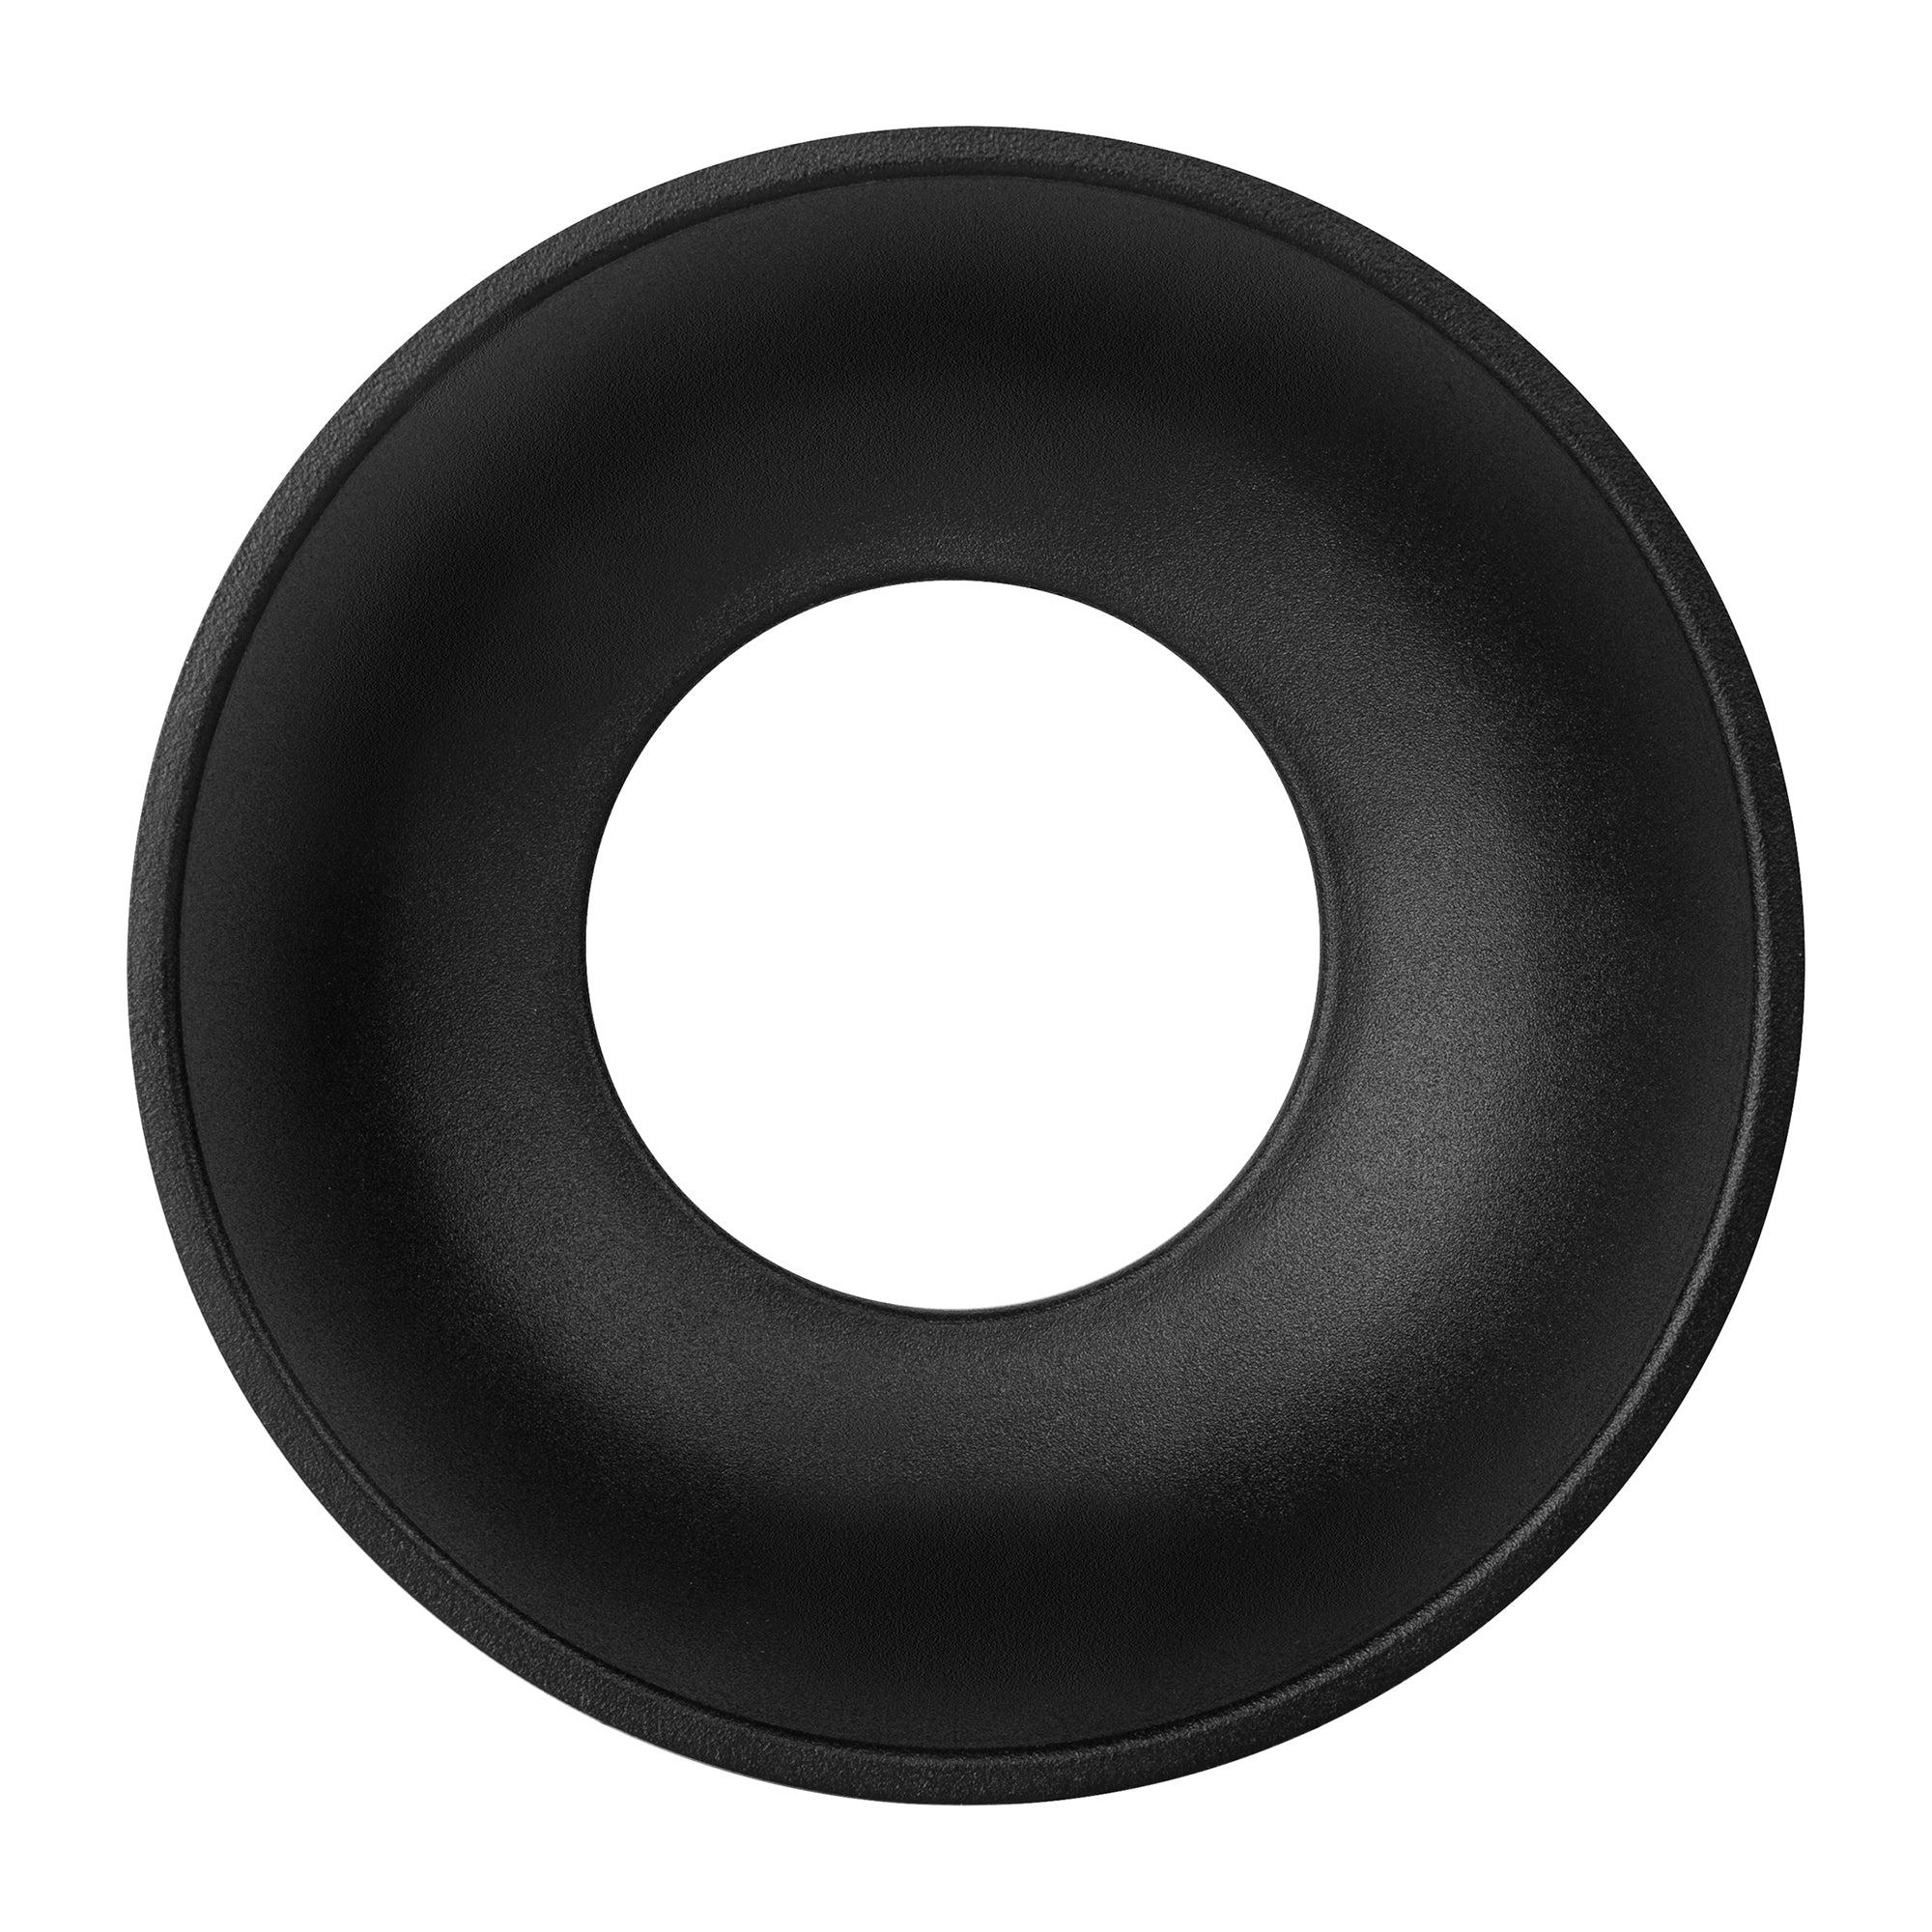 HV5844-BR - Black Inner Ring to Suit HV5844 24w Surface Mounted LED Downlight